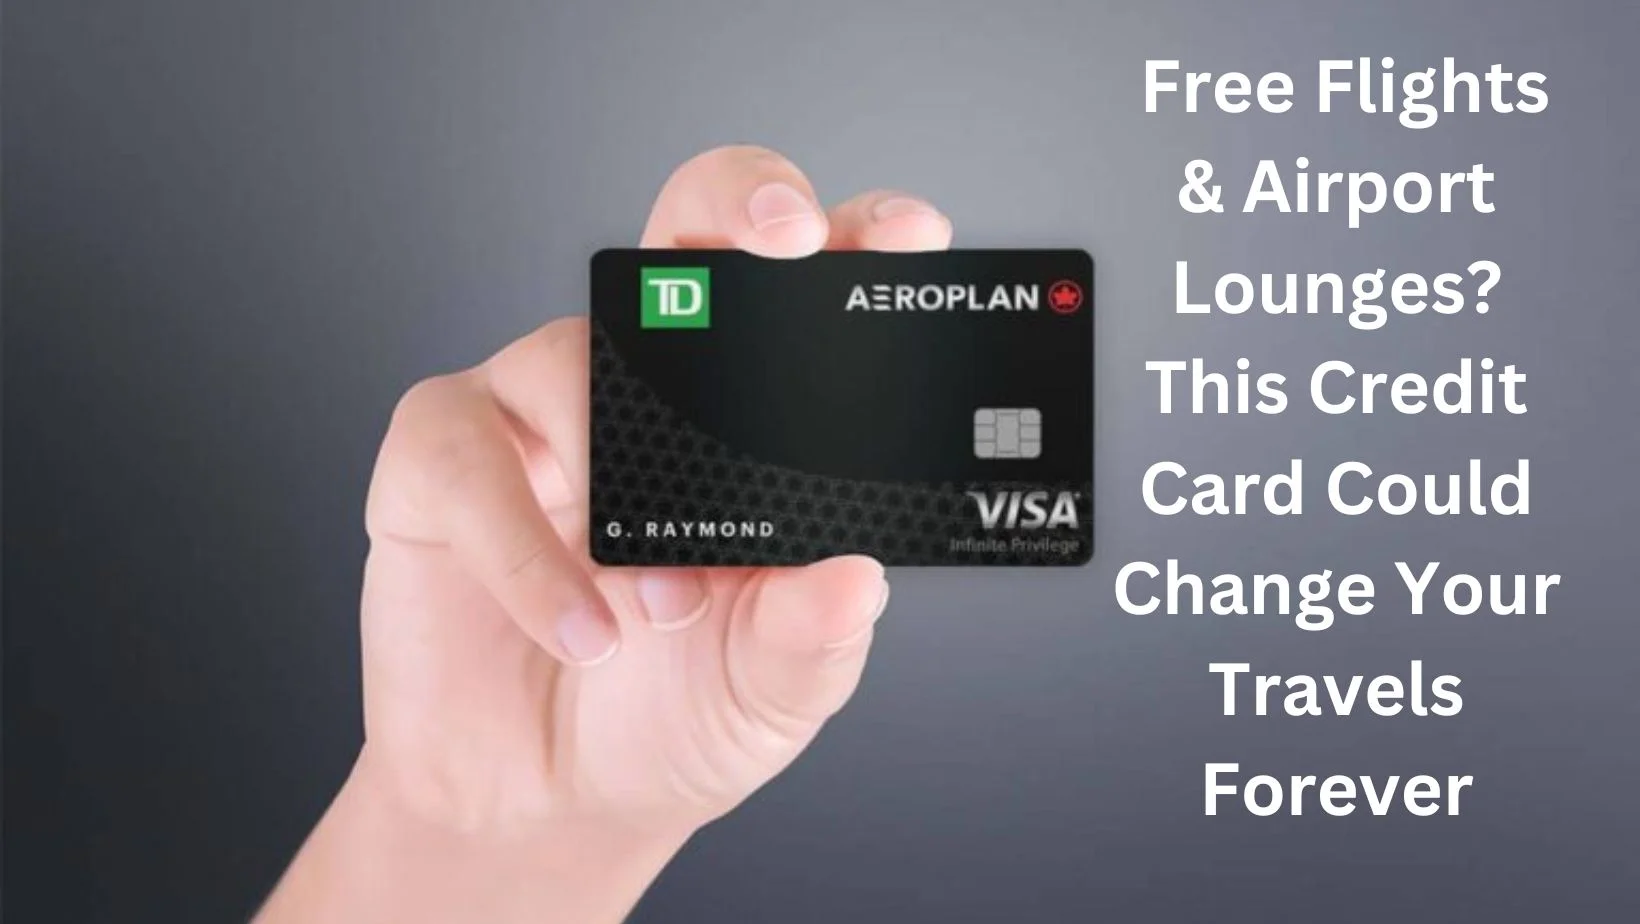 TD Aeroplan Visa Infinite Privilege Credit Card: Luxury Travel on Point 